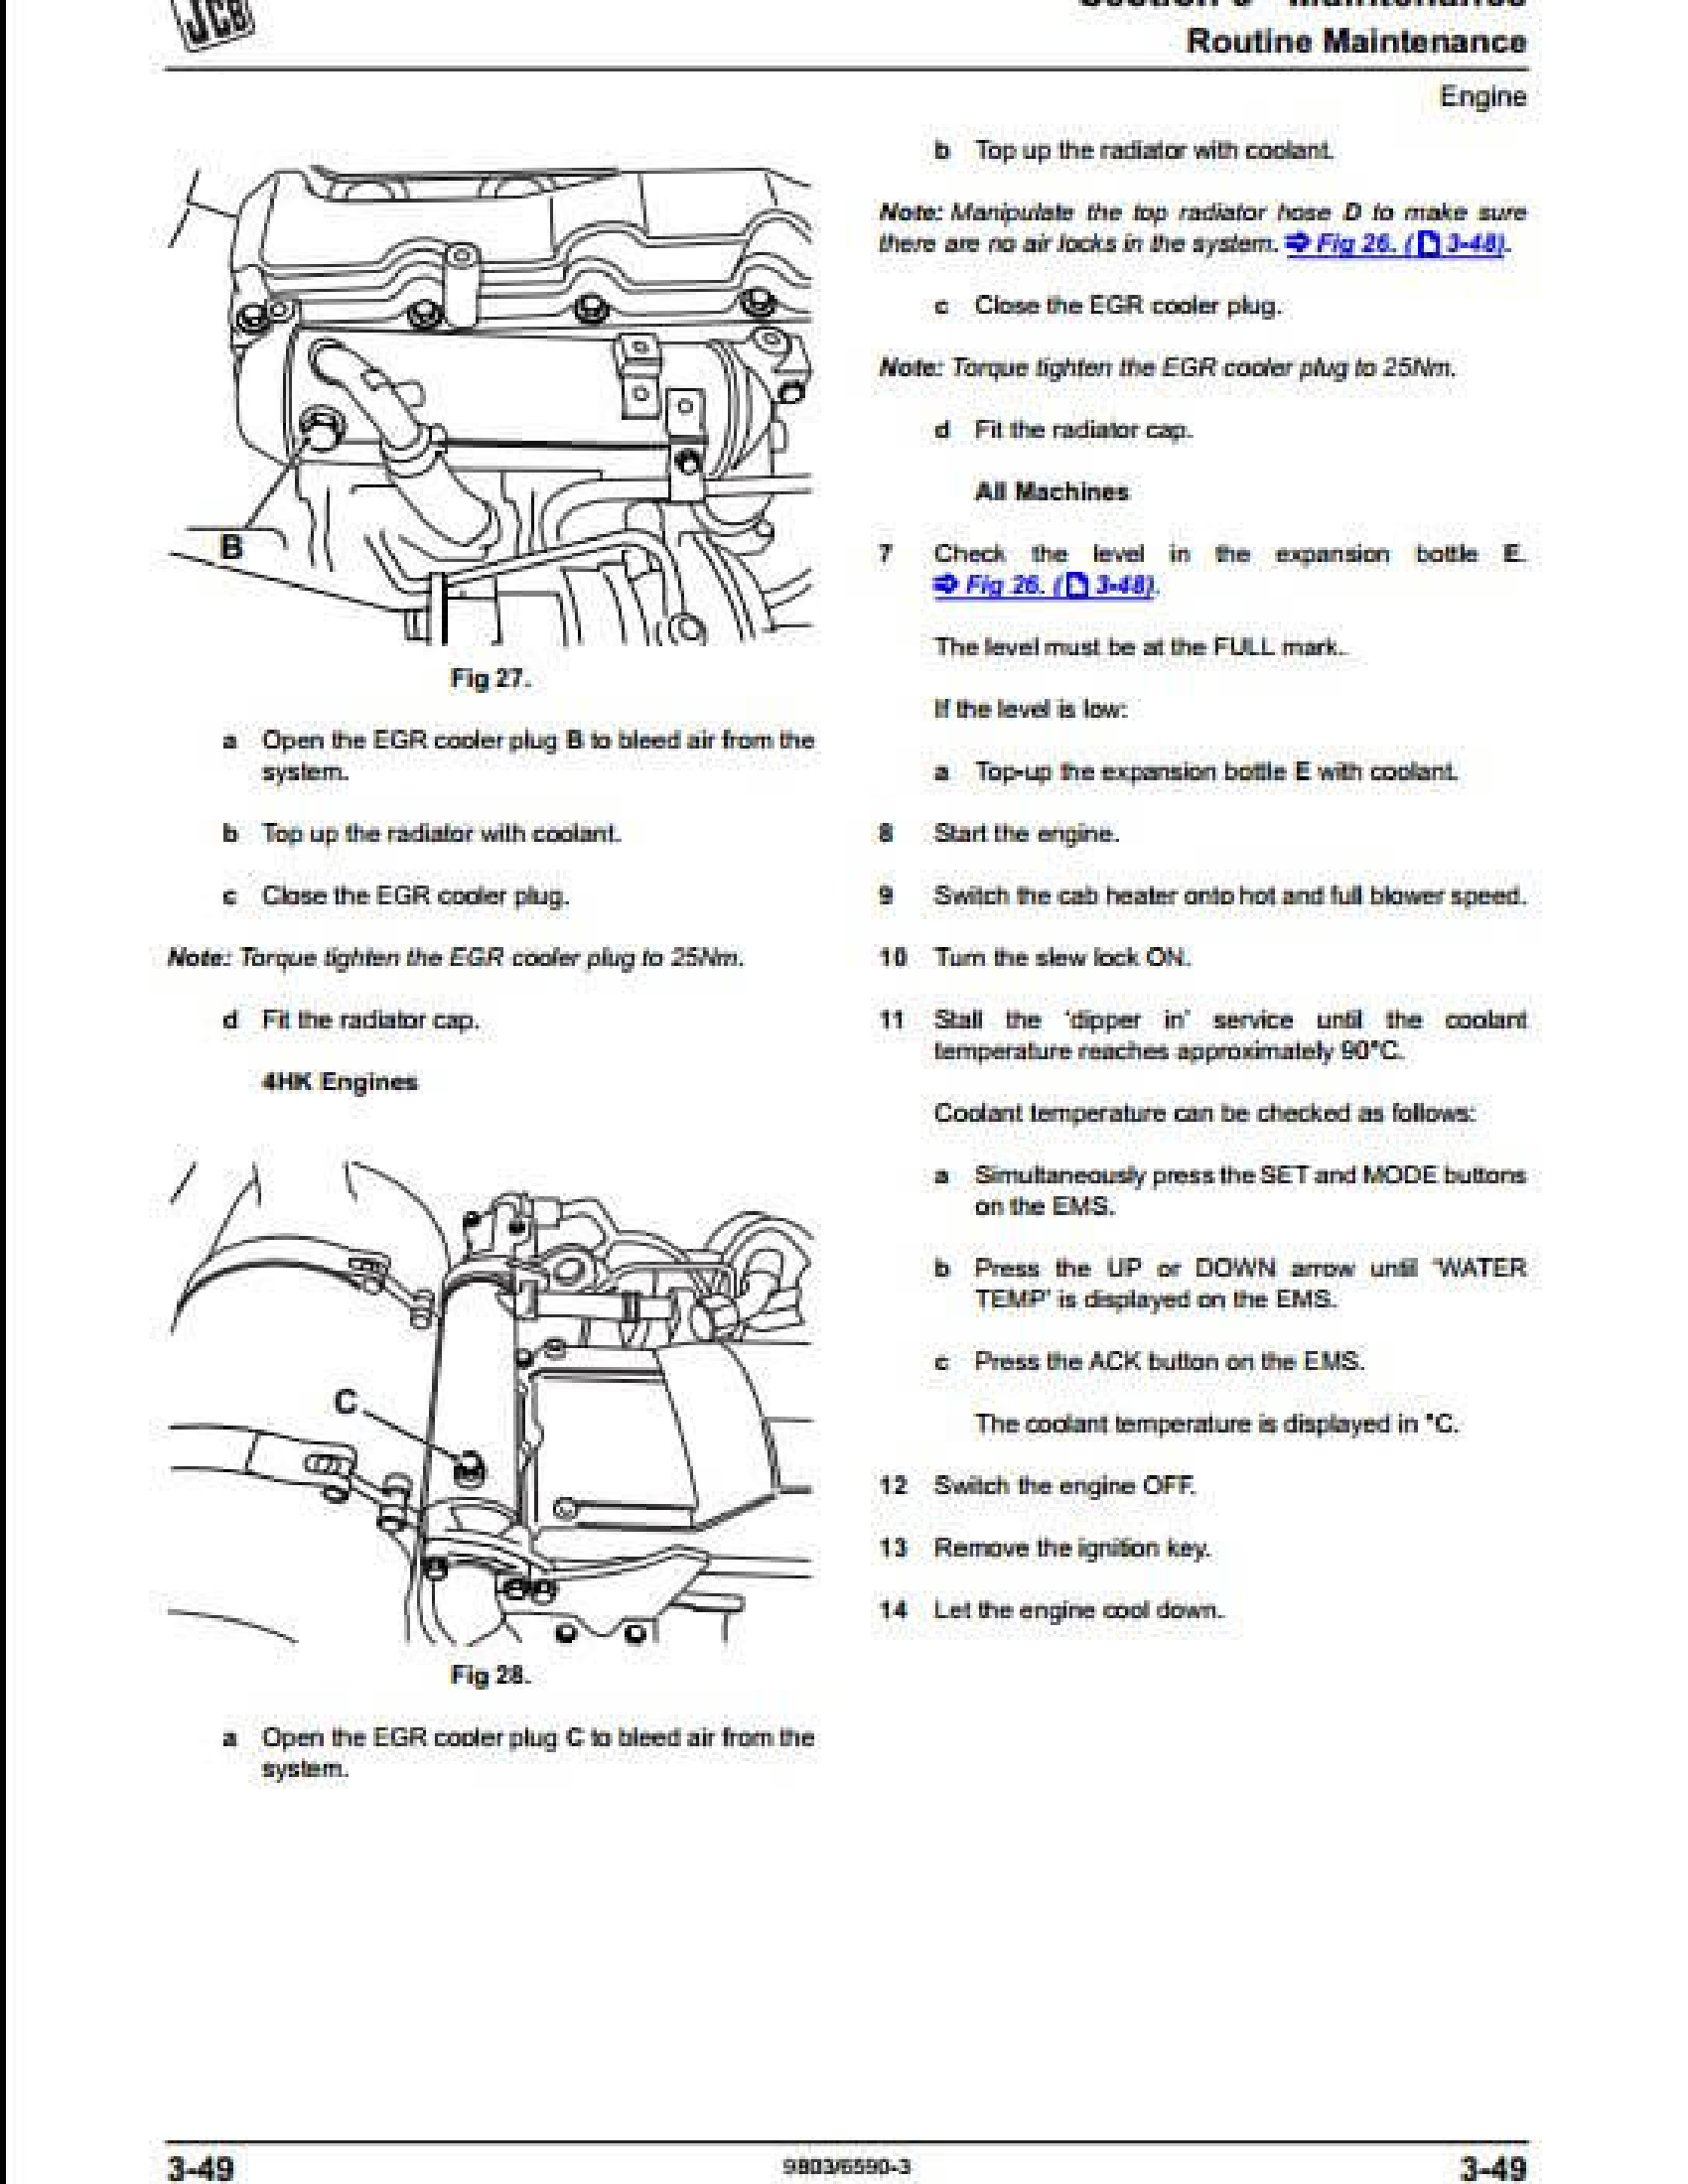 JCB Transmissions Engine manual